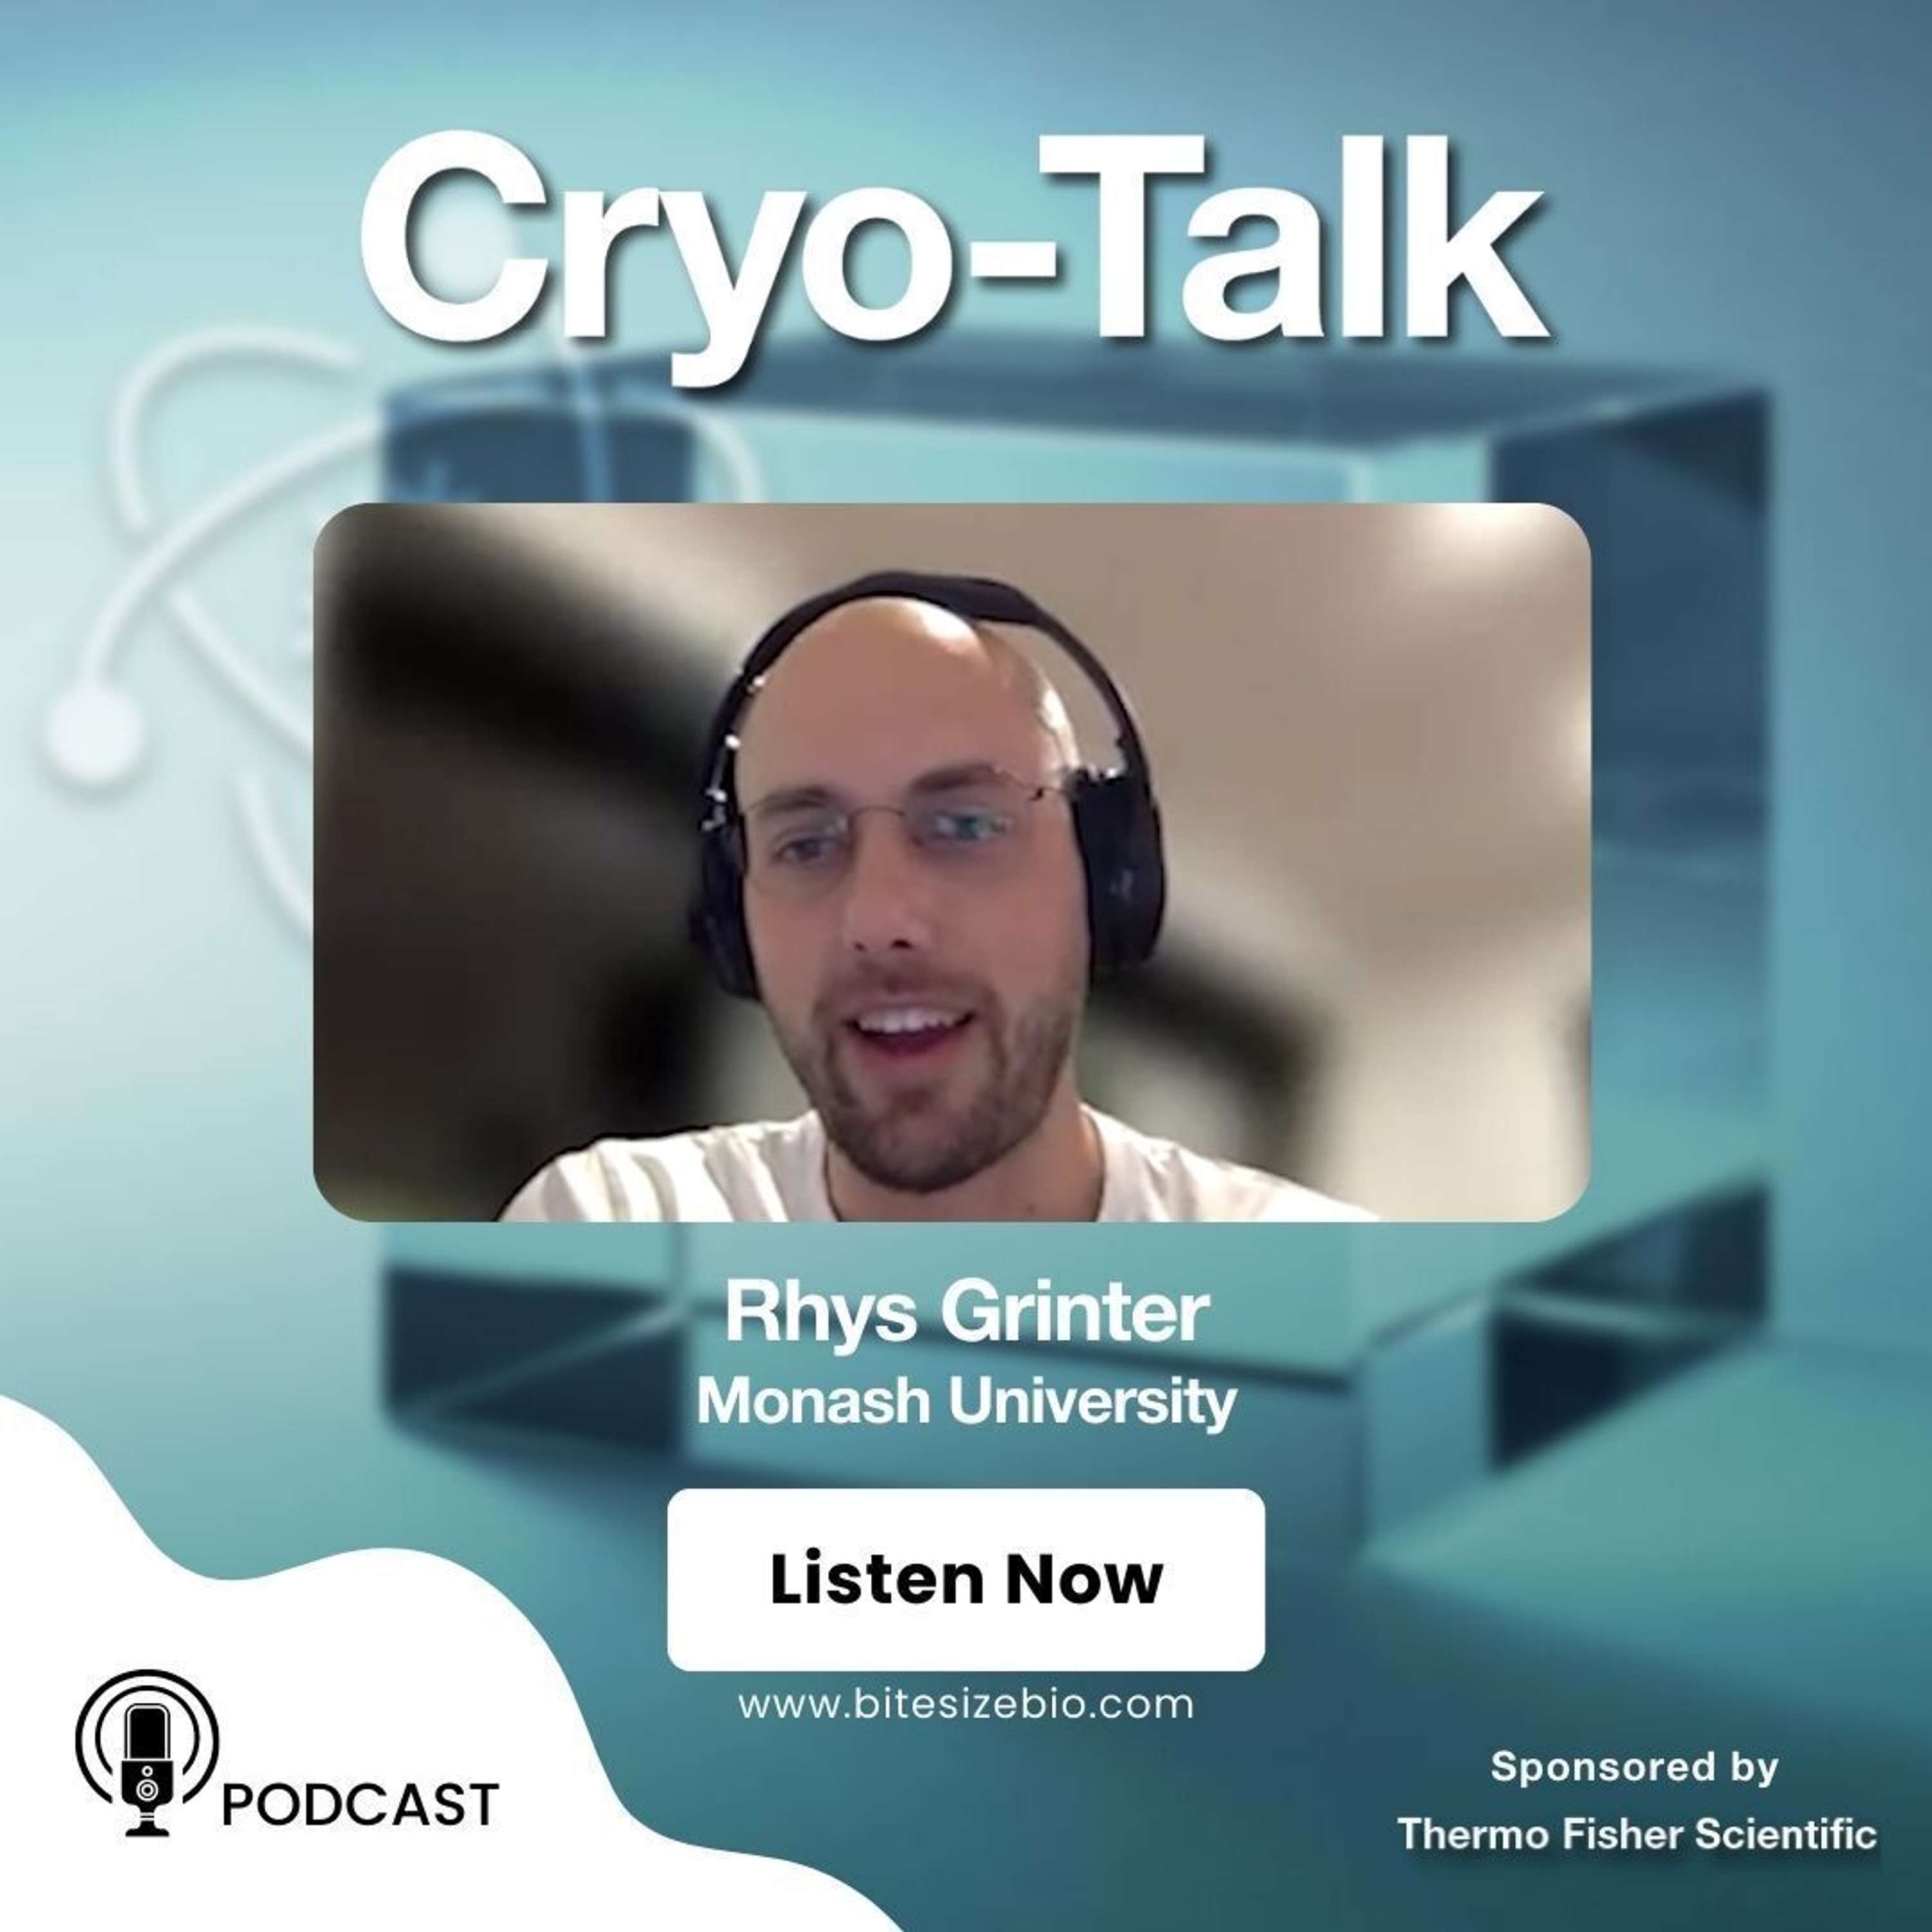 Cryo-Talk interviews Rhys Grinter (Monash University)